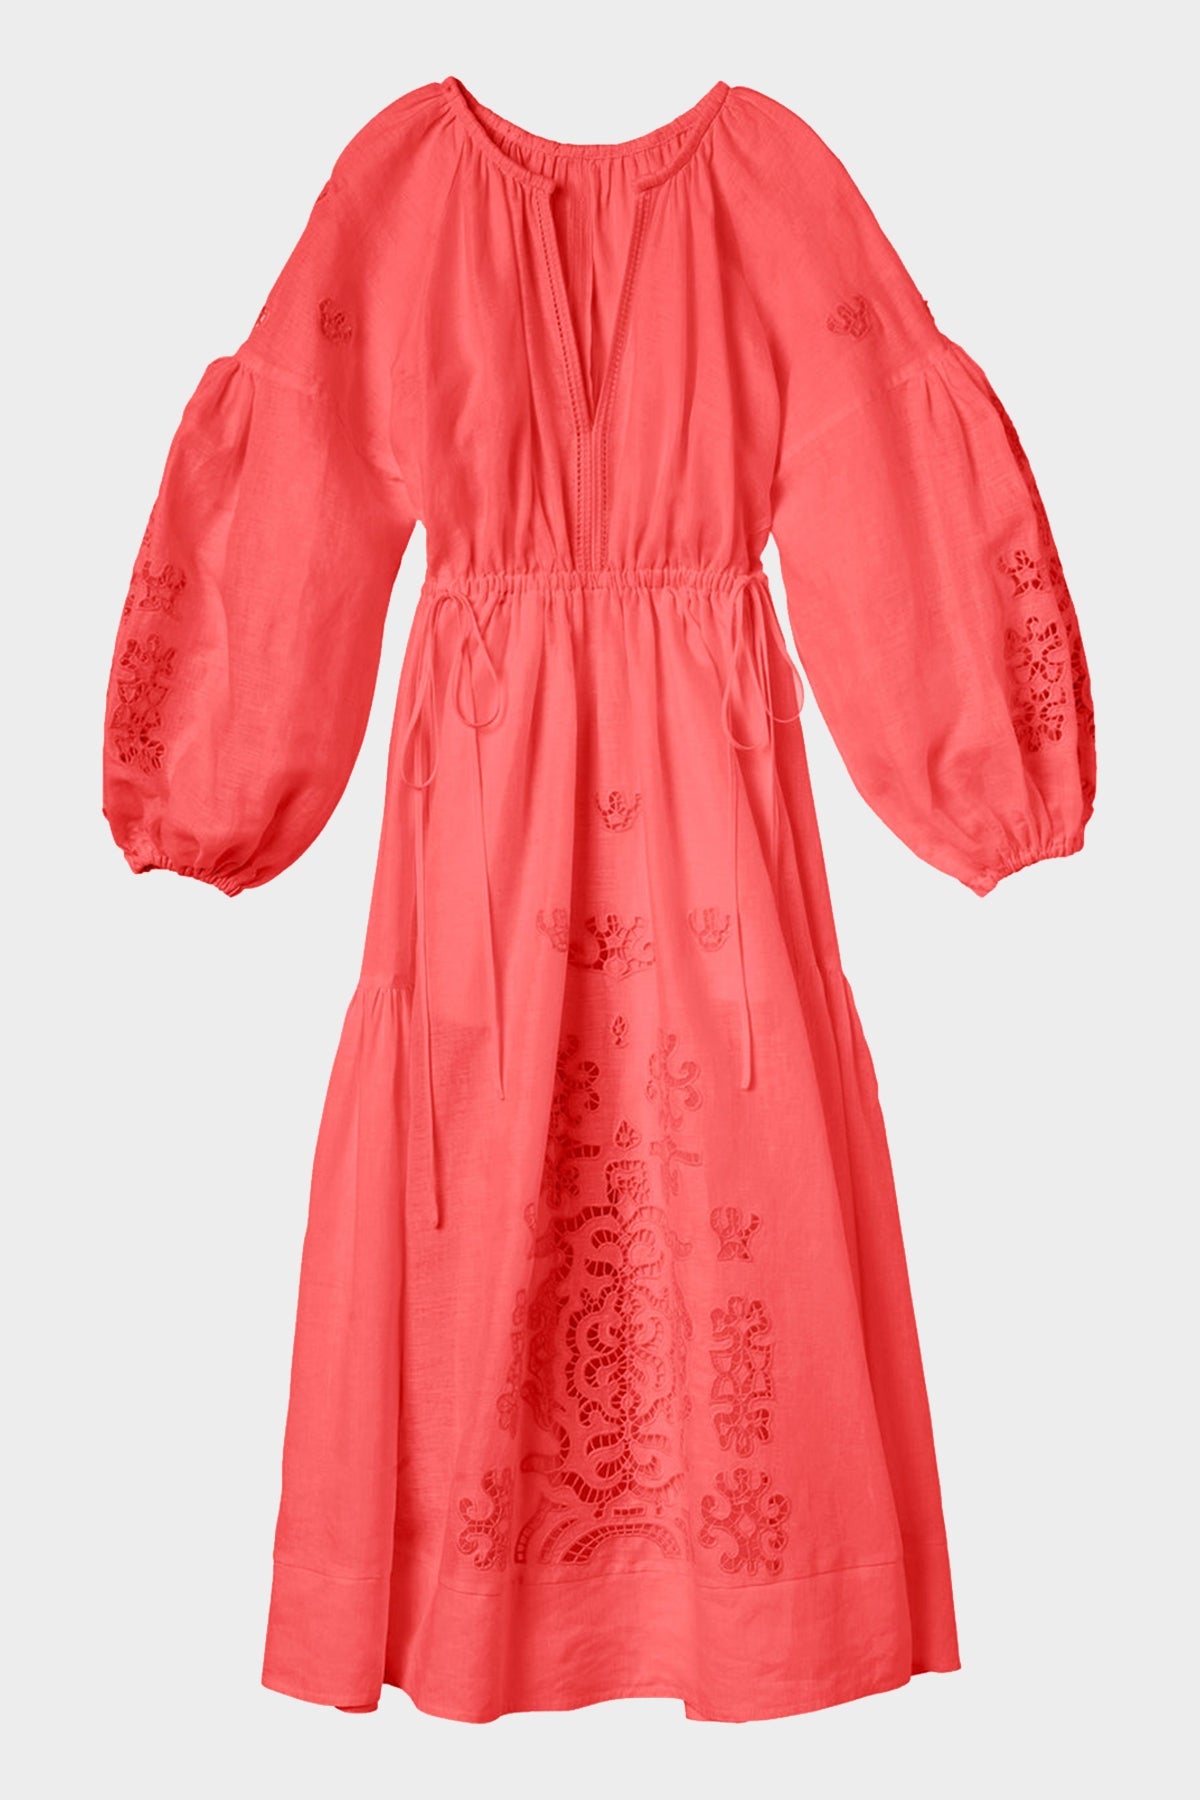 Capri Embroidered Linen Dress in Spiced Coral - shop-olivia.com